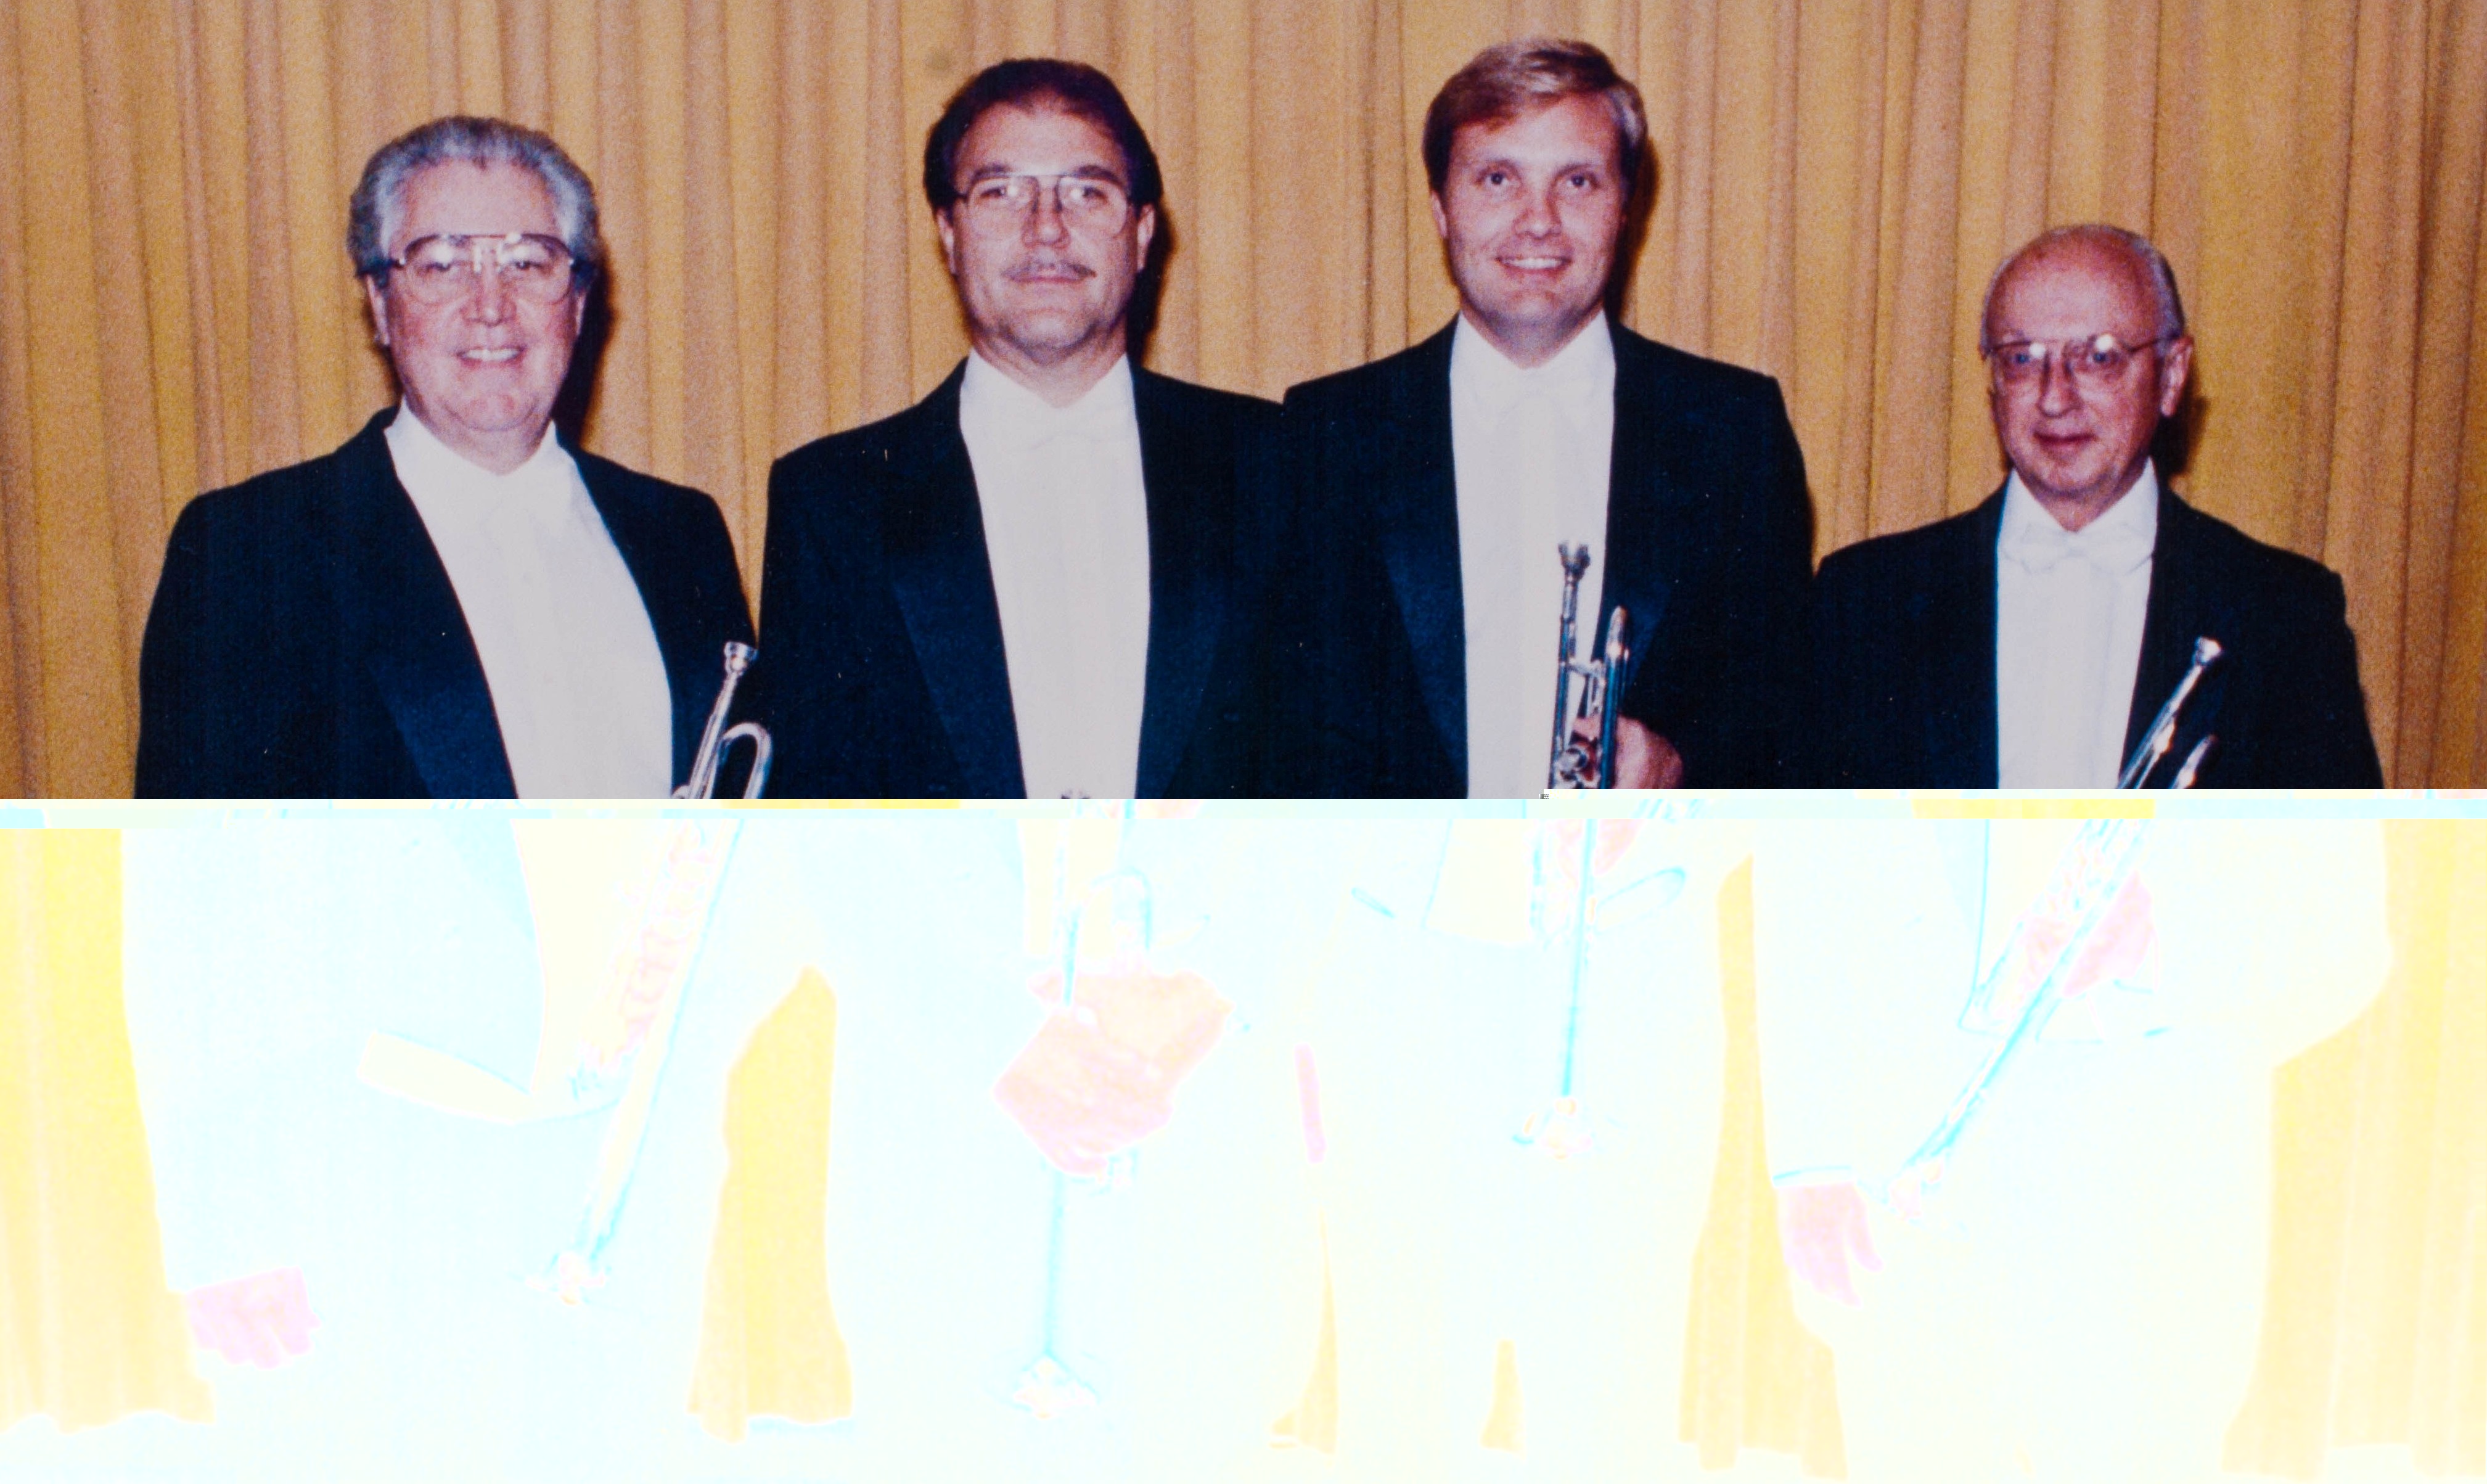 New York Philharmonic trumpet section, circa 1980